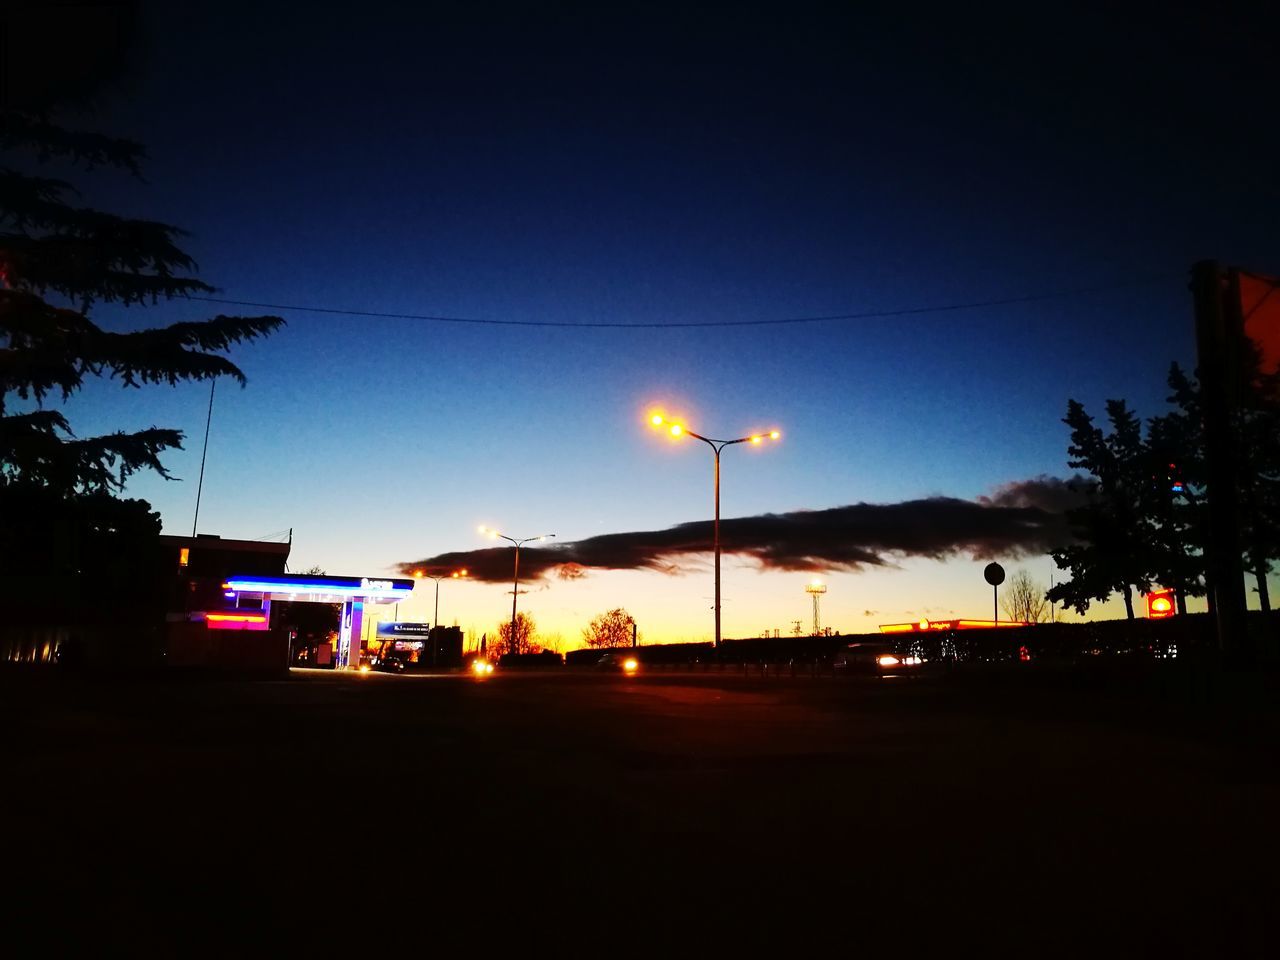 night, illuminated, car, sky, silhouette, street light, transportation, sunset, no people, outdoors, tree, nature